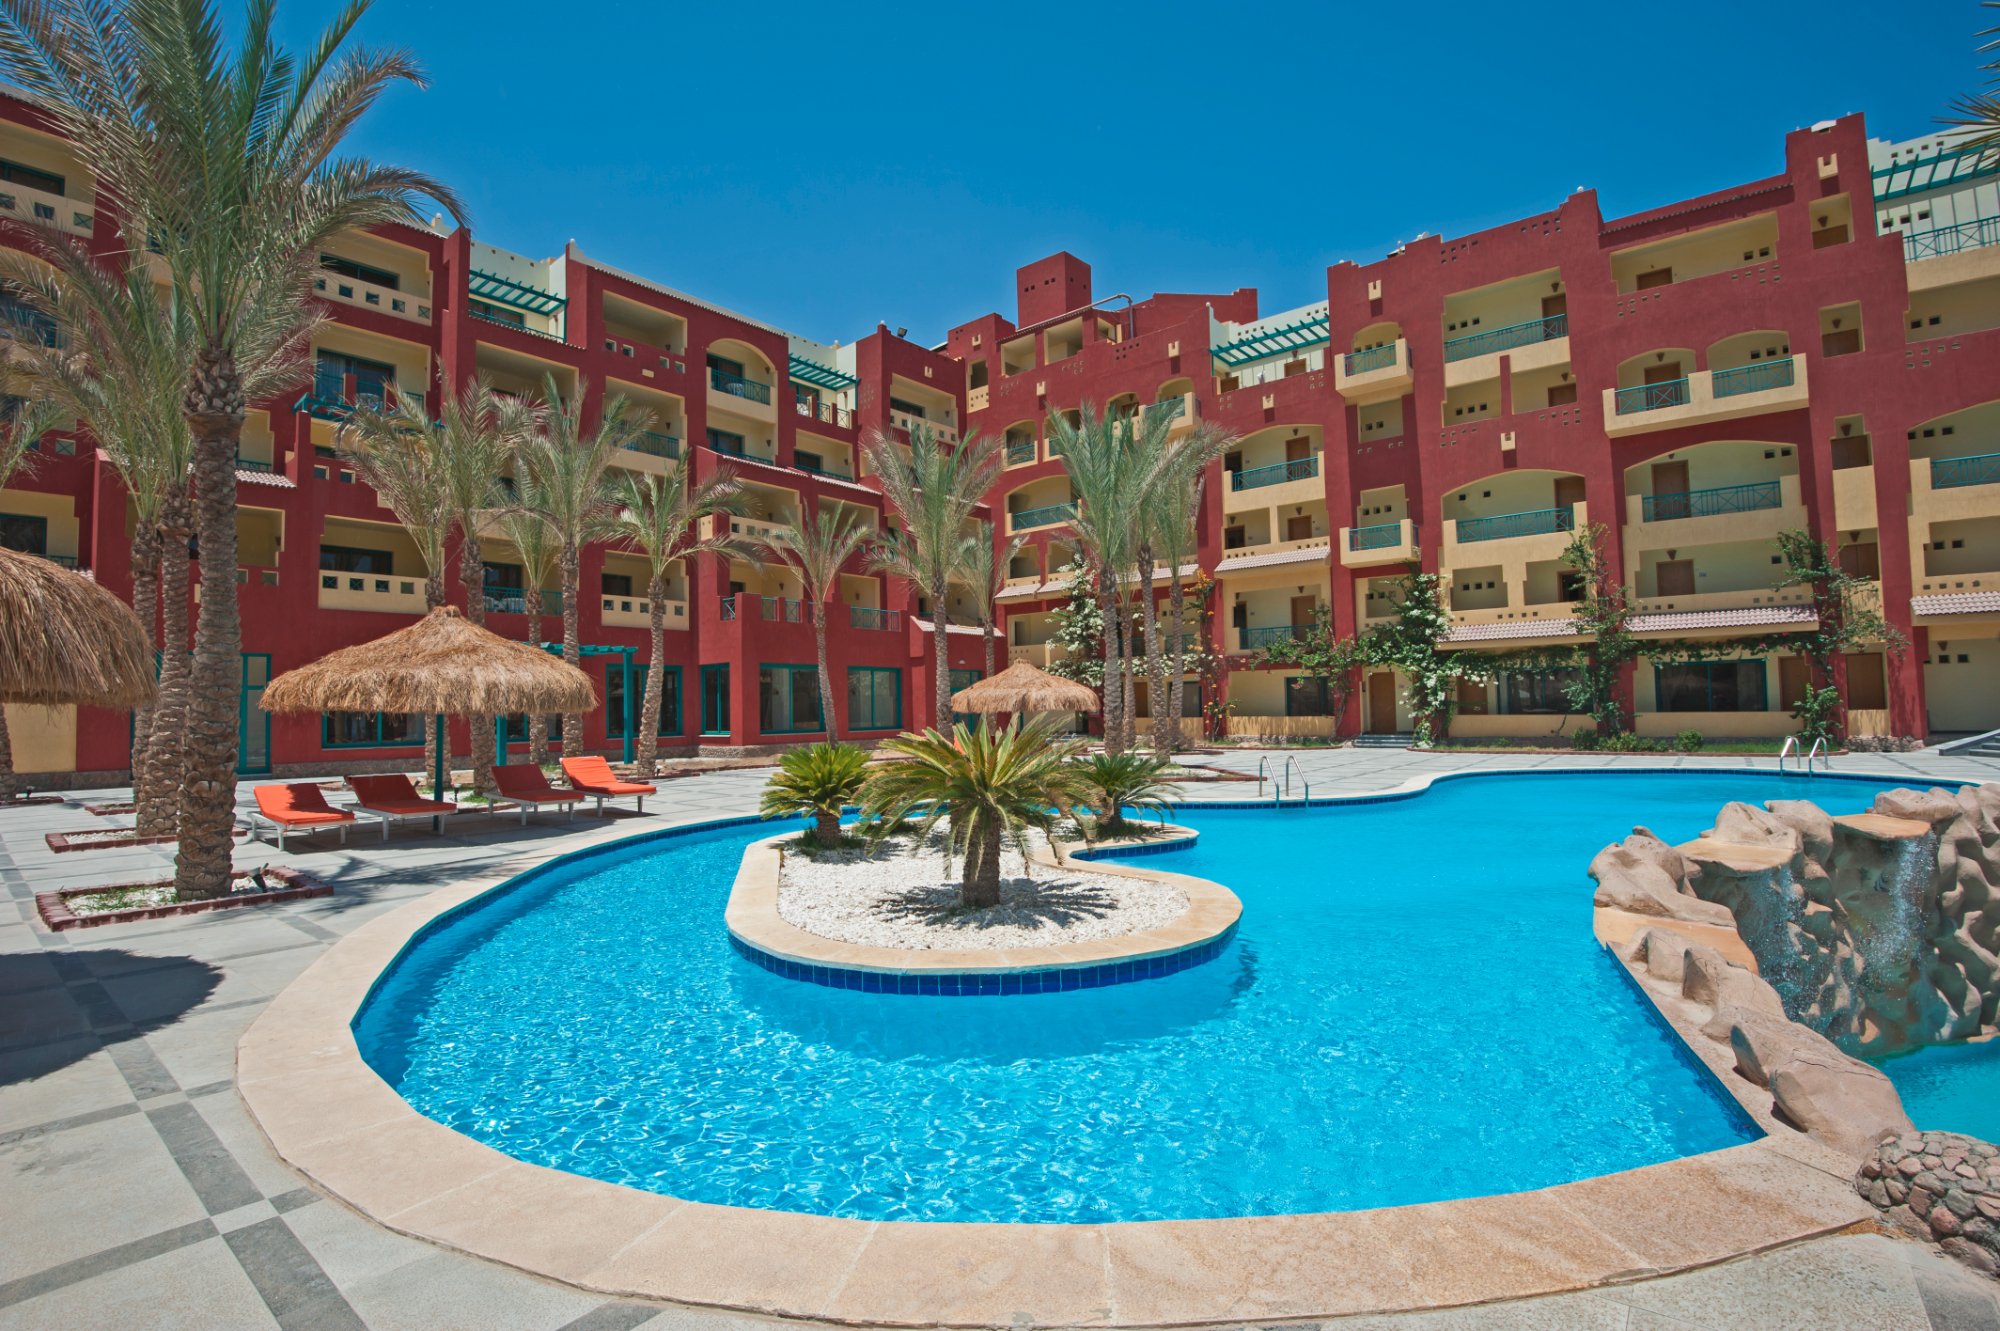 SUN & SEA HOTEL - Prices & Reviews (Hurghada, Egypt)